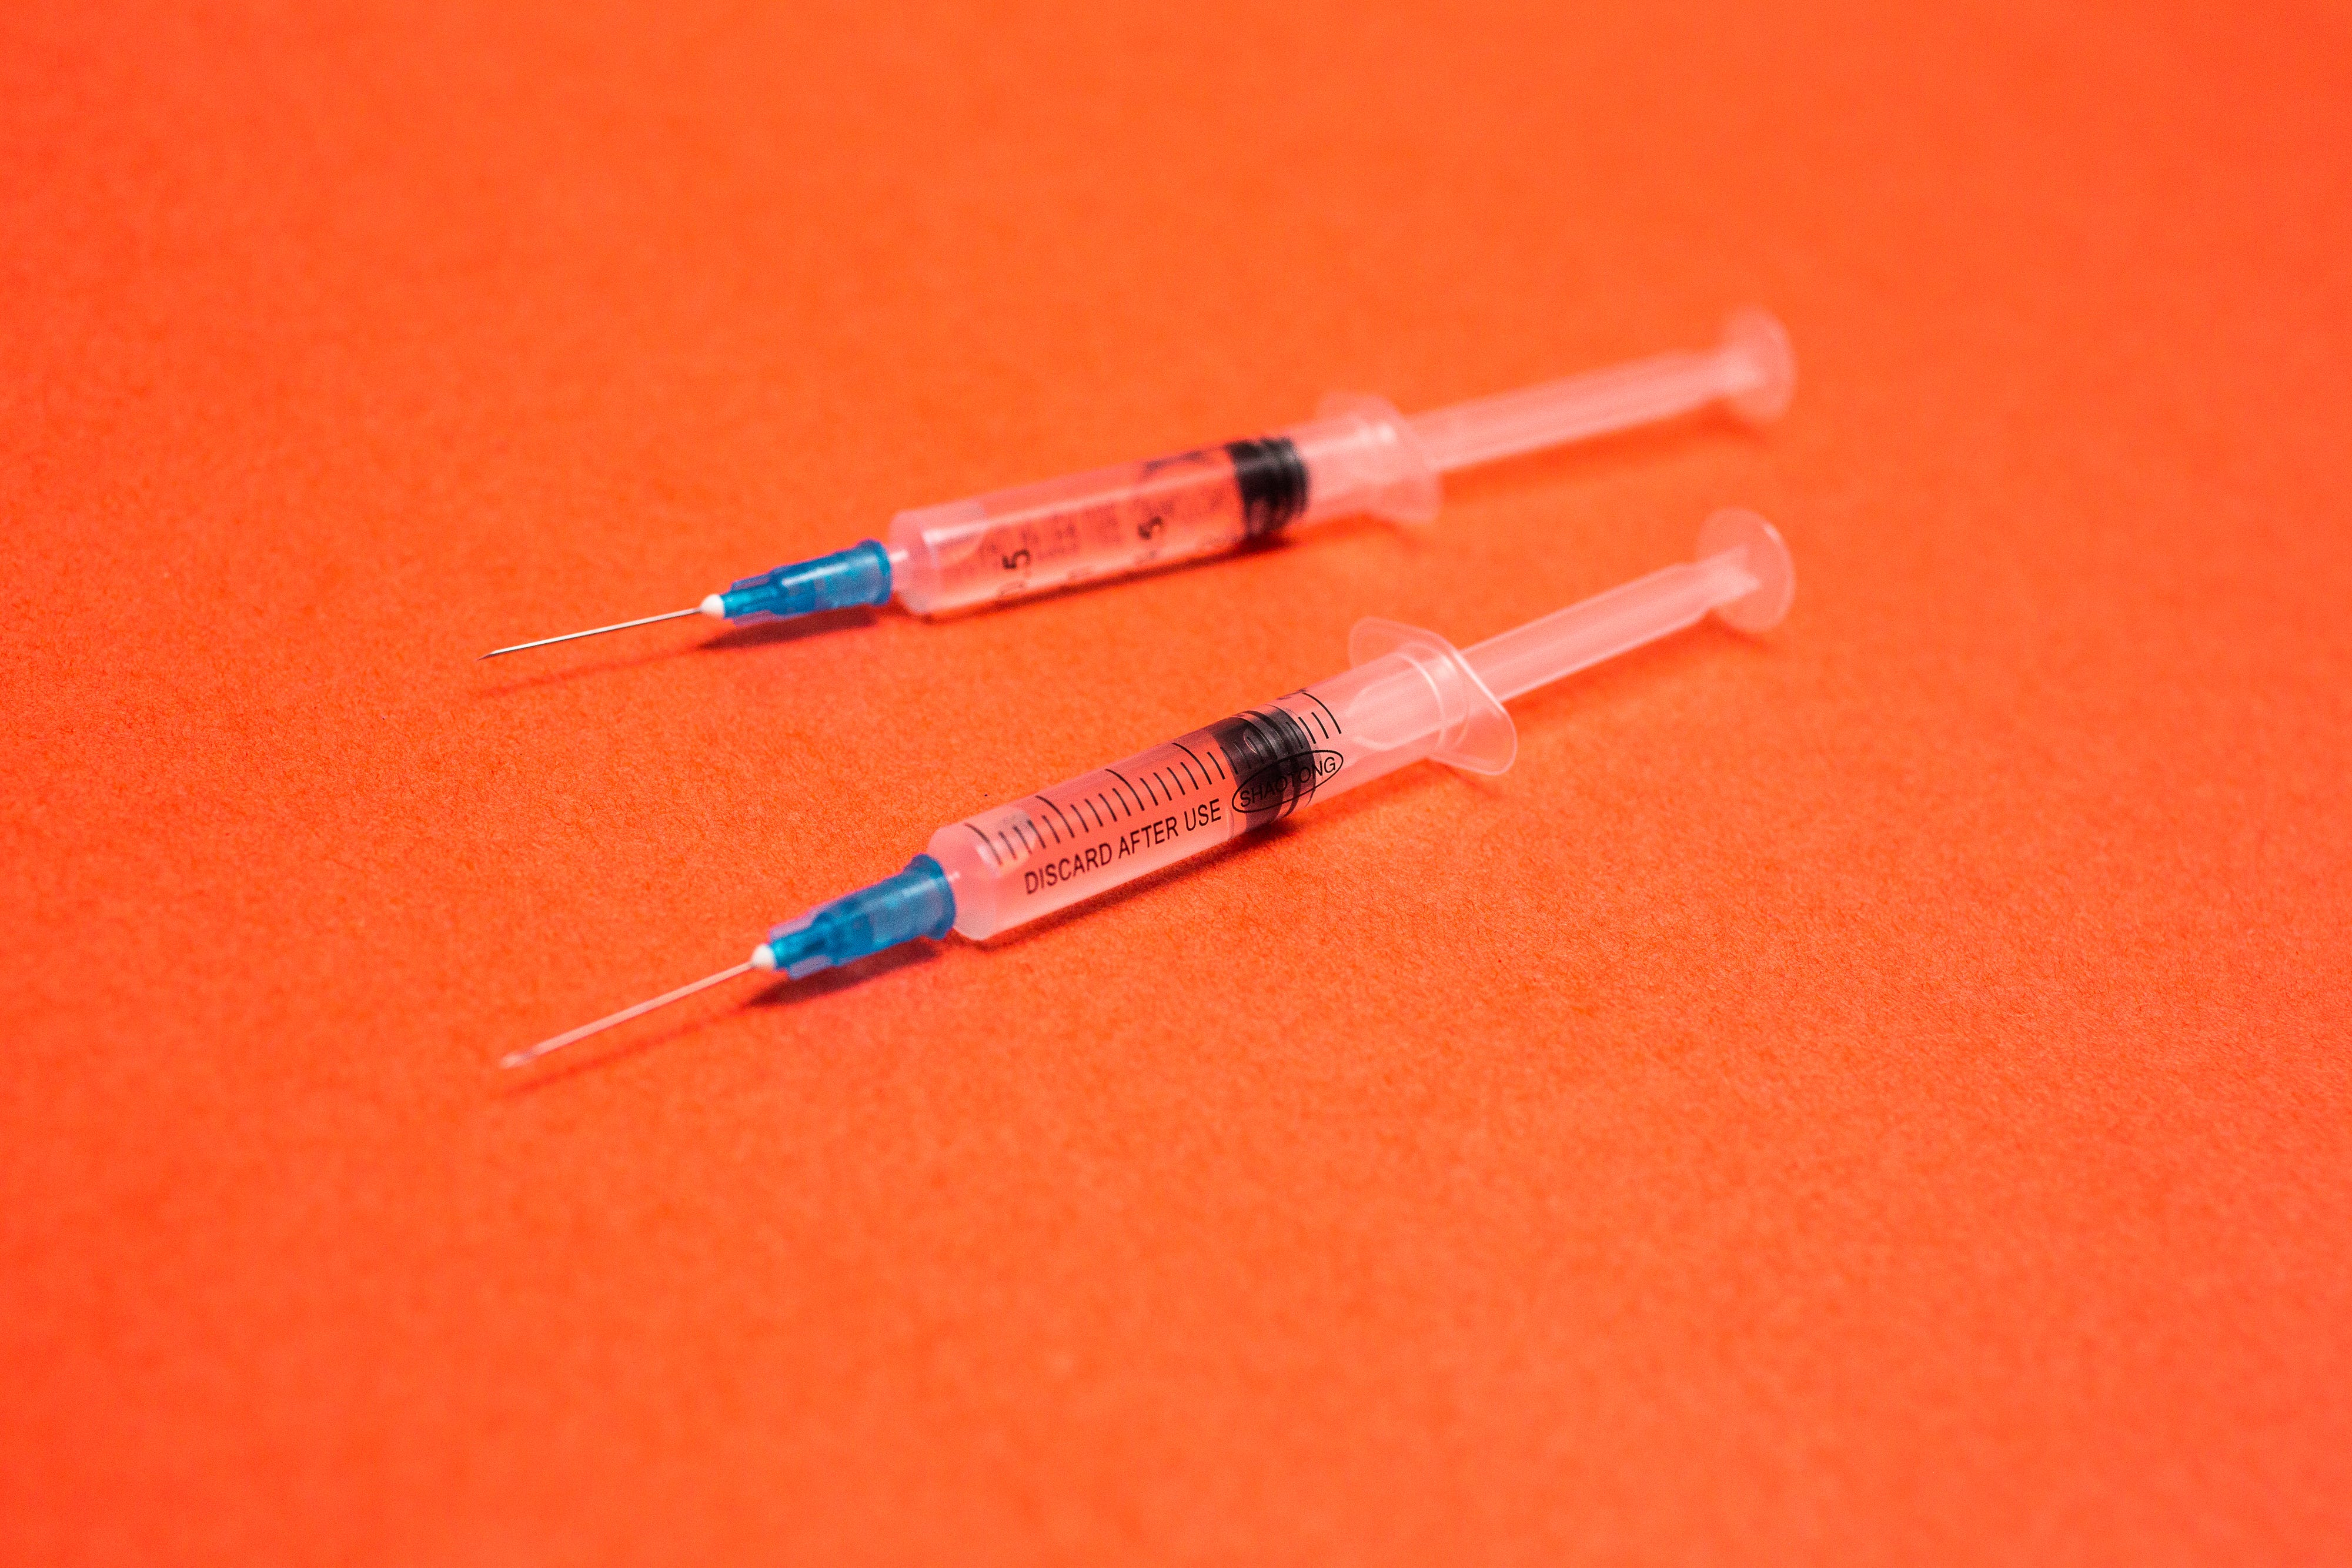 vaccine syringes